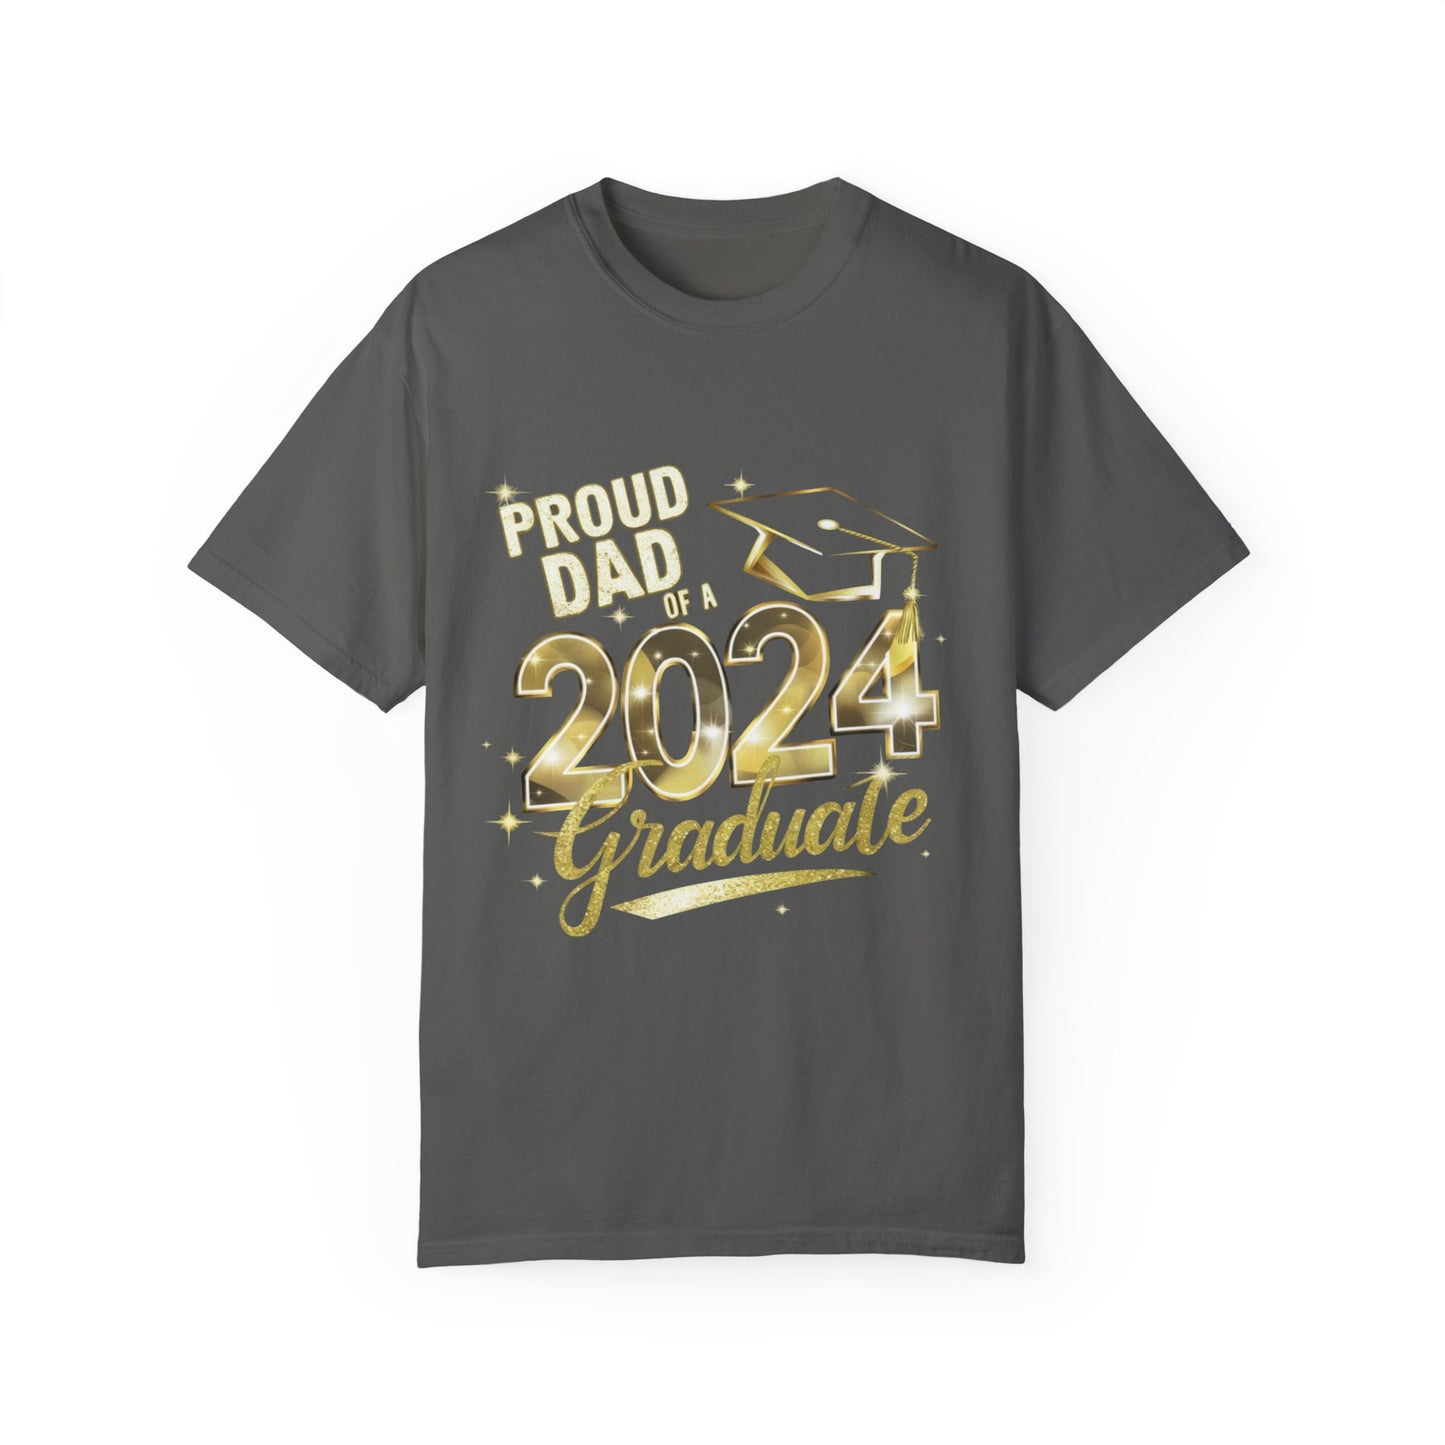 Proud of Dad 2024 Graduate Unisex Garment-dyed T-shirt Cotton Funny Humorous Graphic Soft Premium Unisex Men Women Pepper T-shirt Birthday Gift-12